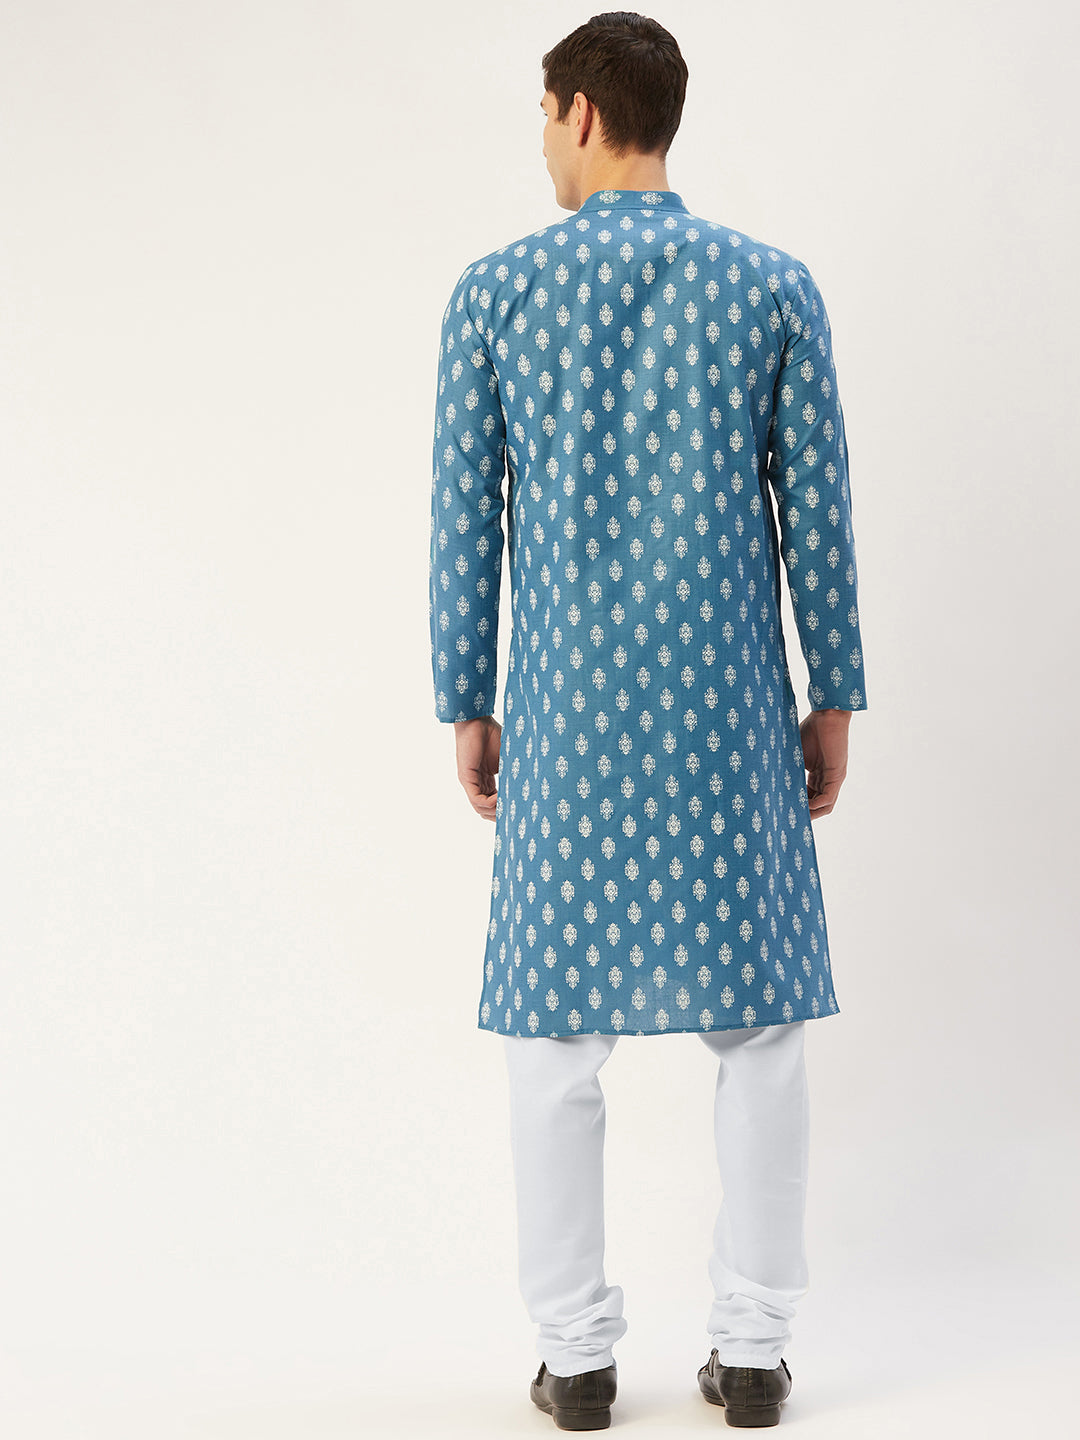 Jompers Men's Teal Cotton Floral printed kurta Pyjama Set